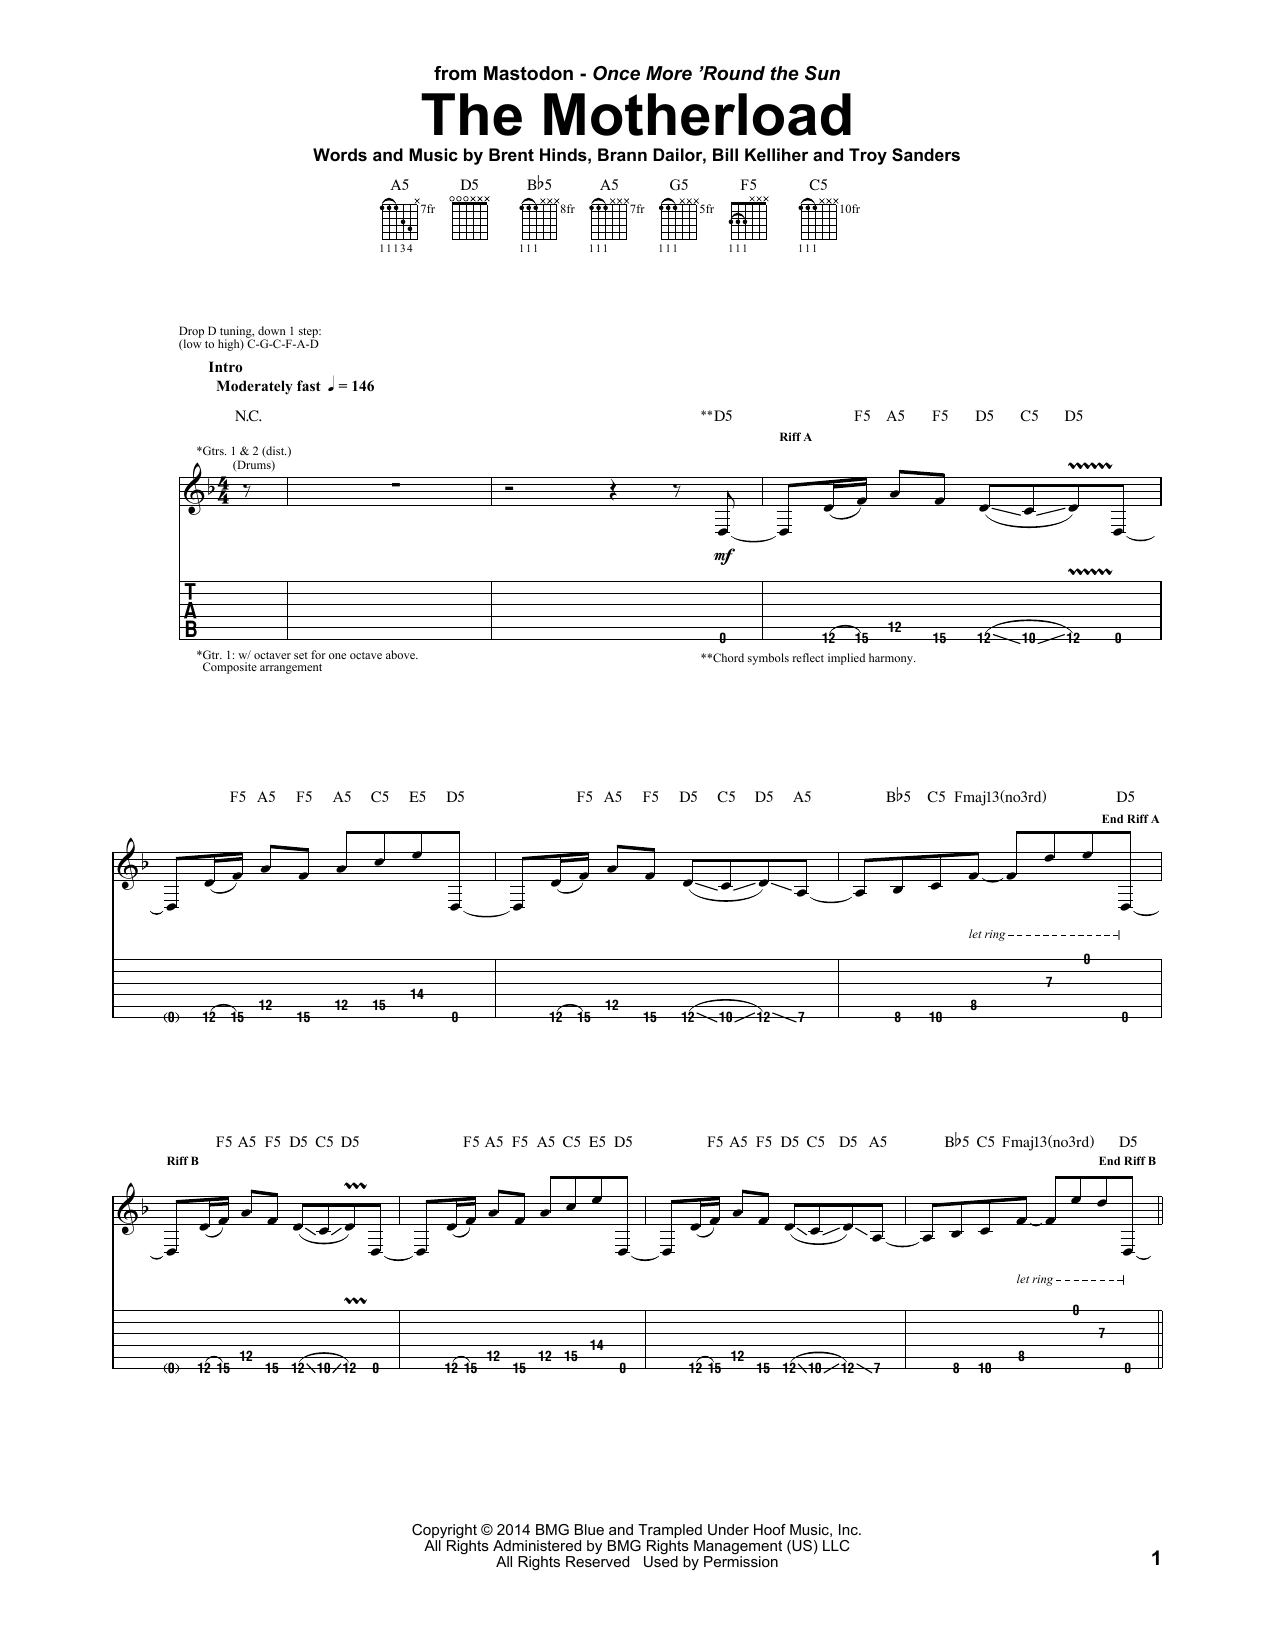 Mastodon The Motherload Sheet Music Notes & Chords for Guitar Tab - Download or Print PDF